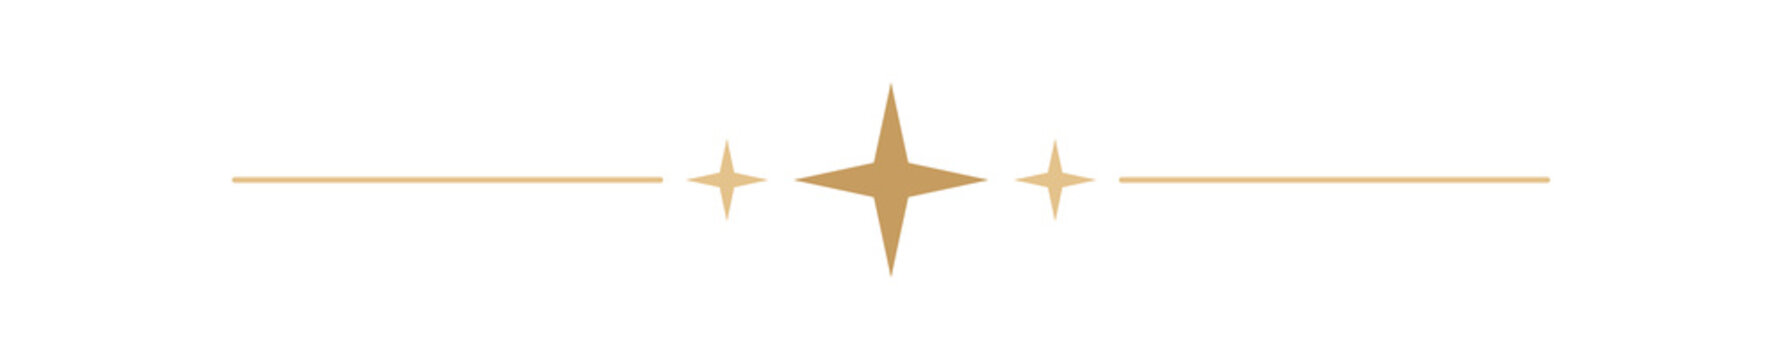 Divider with Star Christmas frame. holiday border horizontal line shape icon for decorative vintage doodle element, greeting card, invitation. design vector illustration